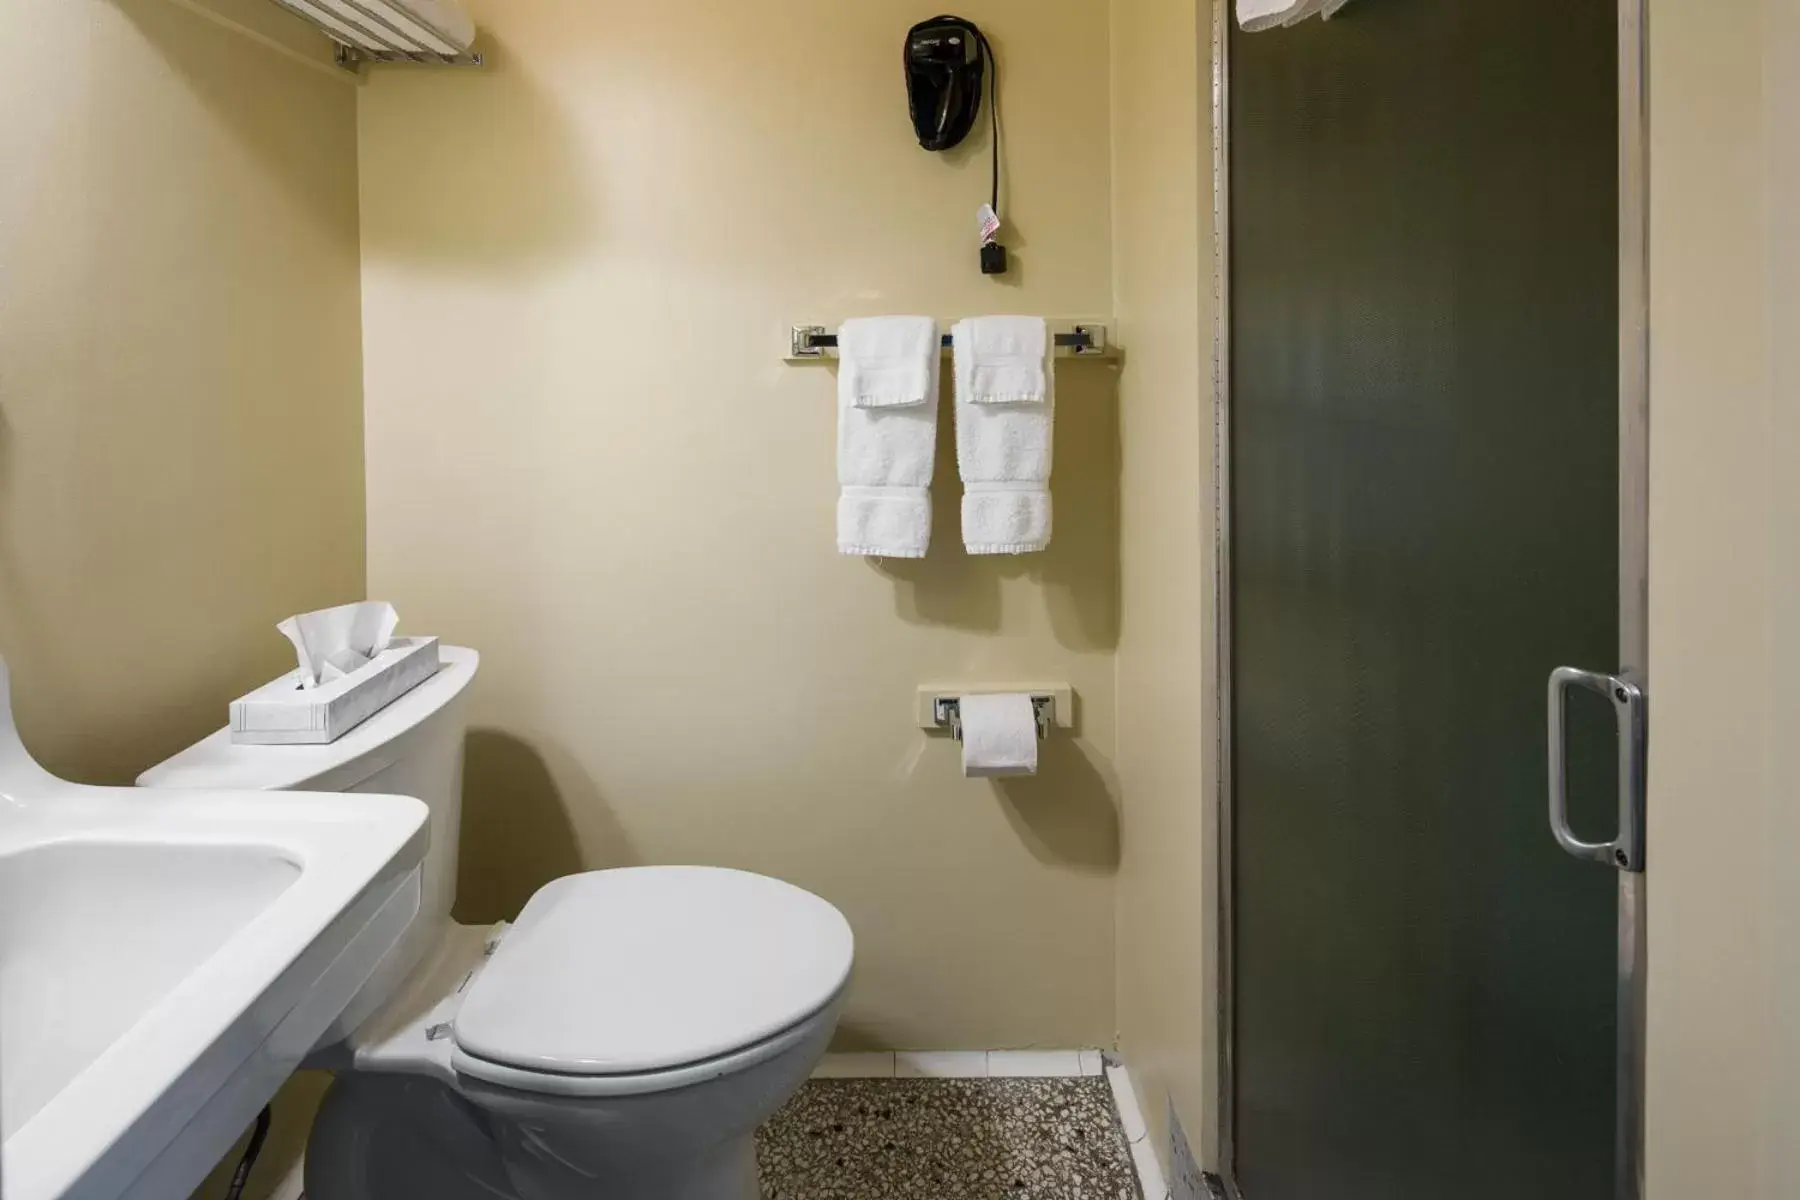 Bathroom in Finlen Hotel and Motor Inn